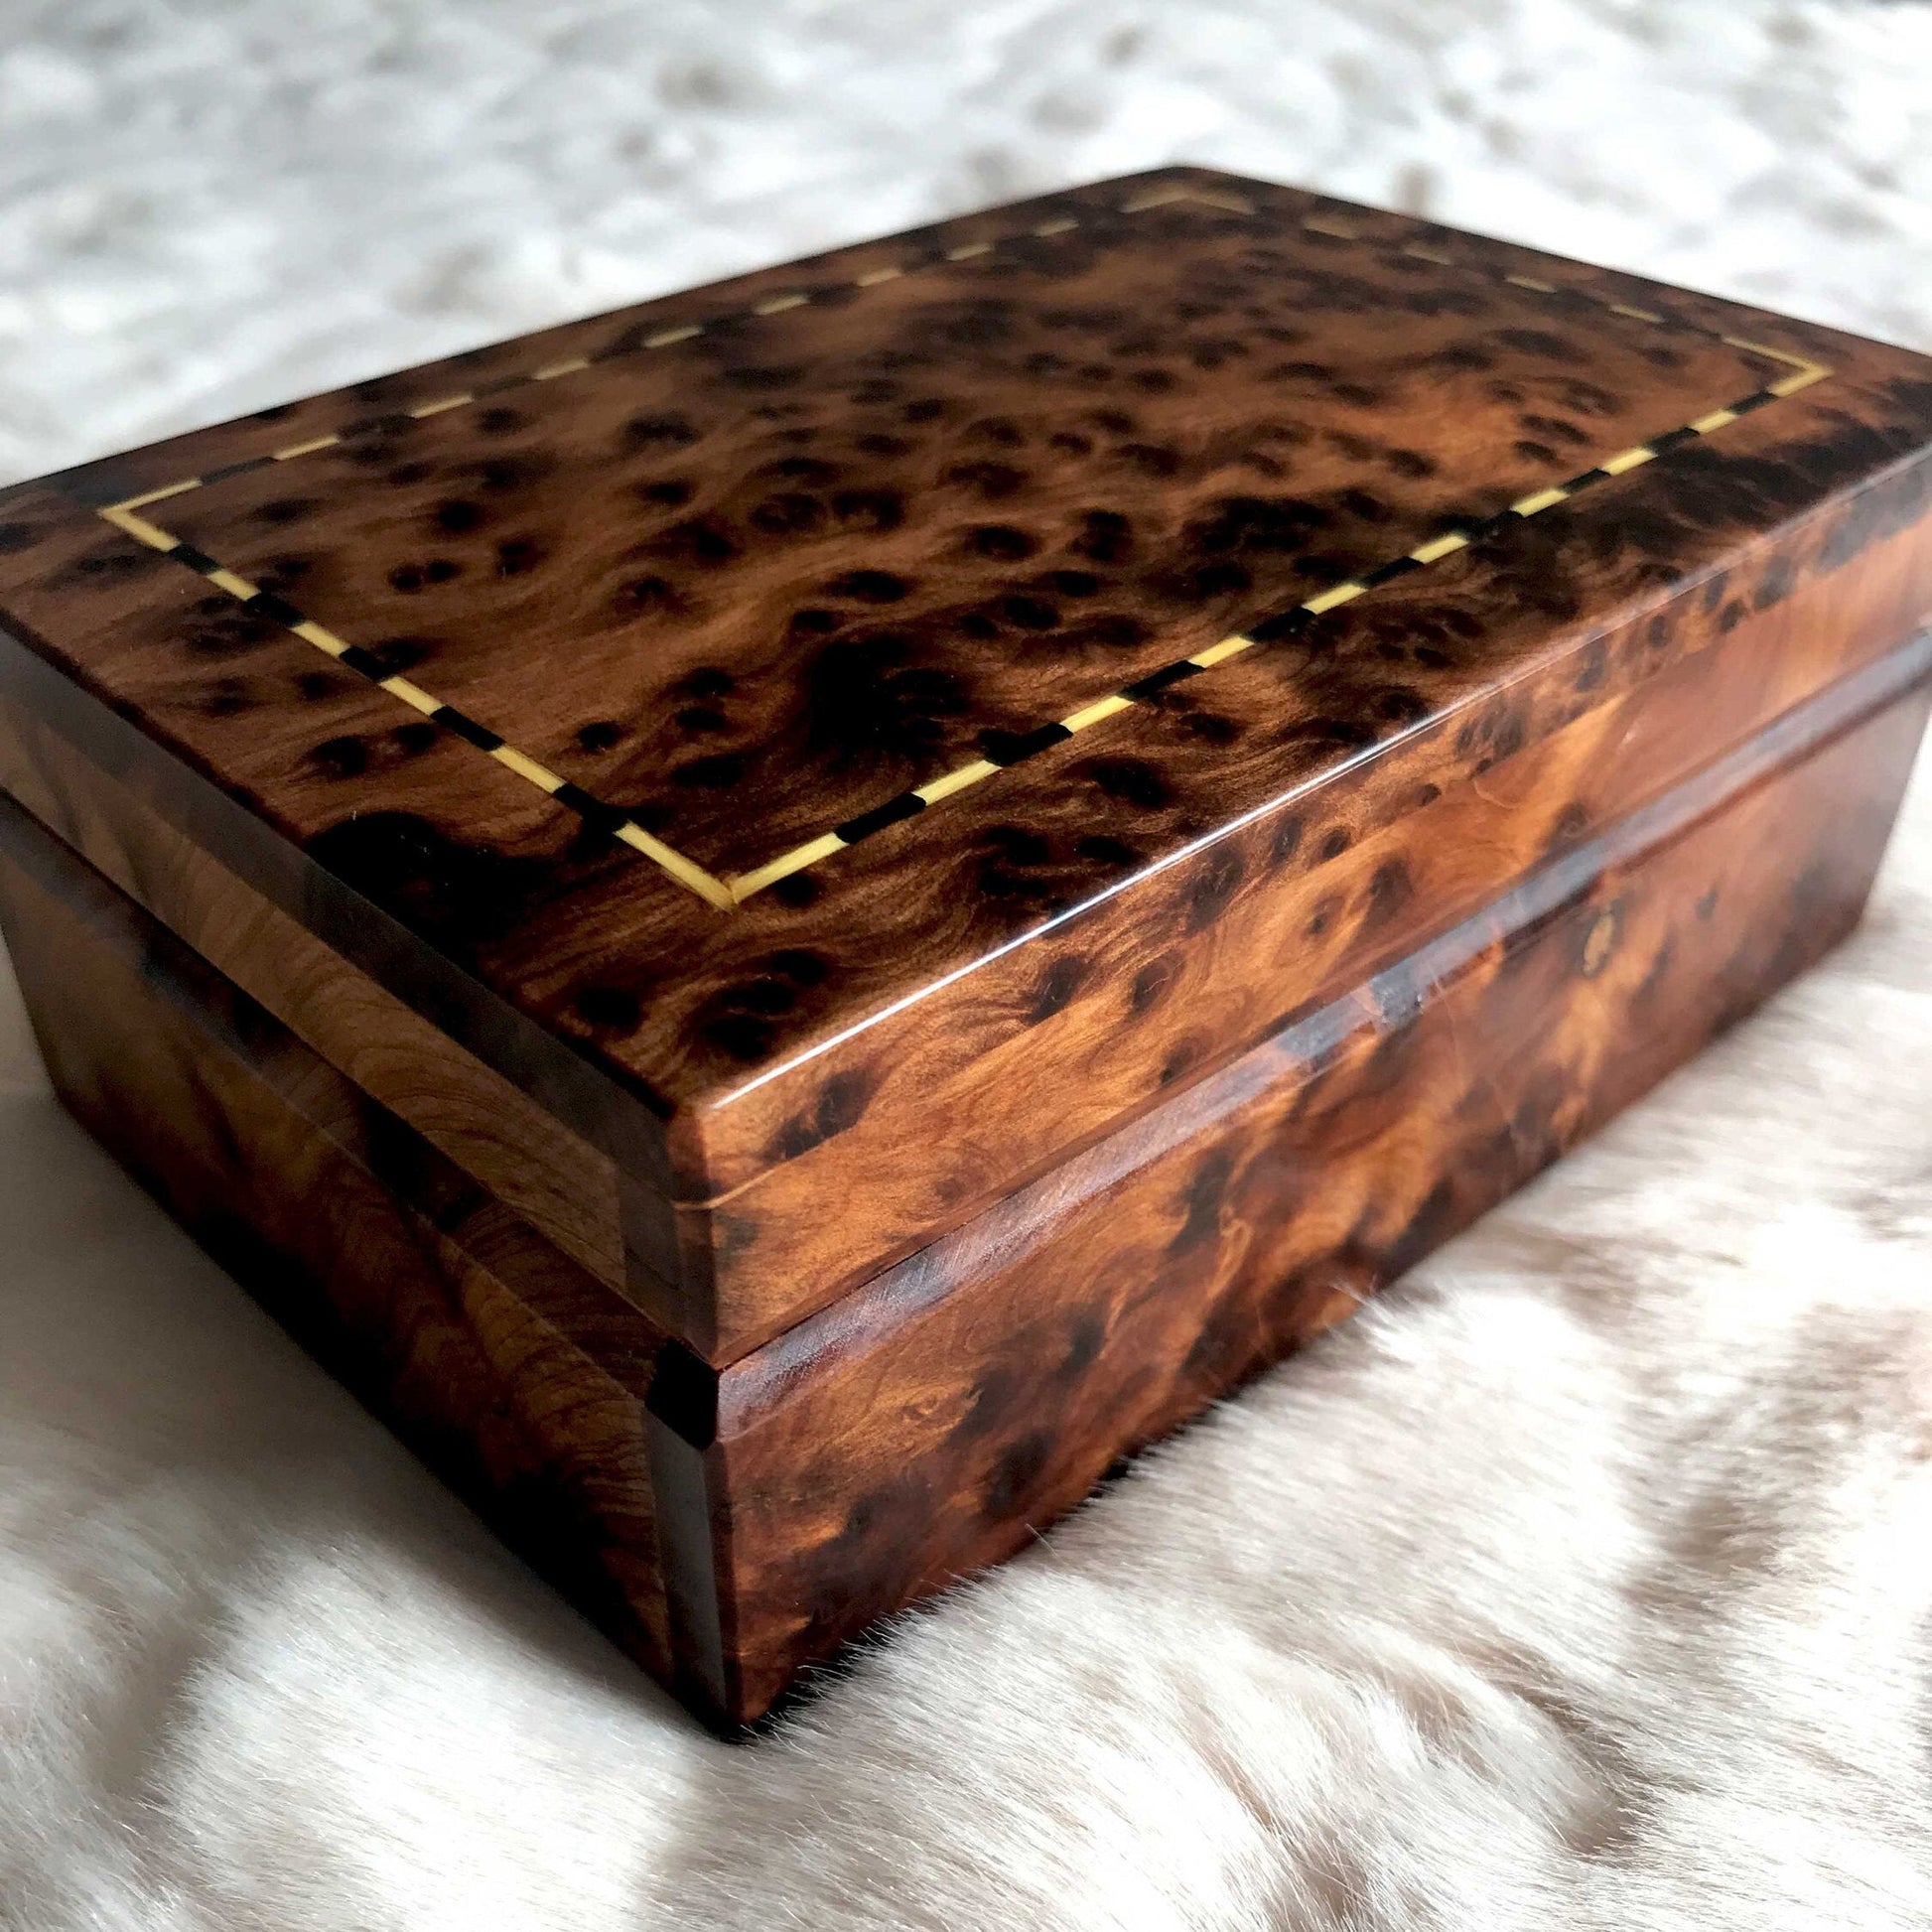 6"x4" Small Thuya wood jewellery Box,gift idea,wooden box organizer,engraved Custom Jewelry Box,decorative wooden box holder,Keepsake Box